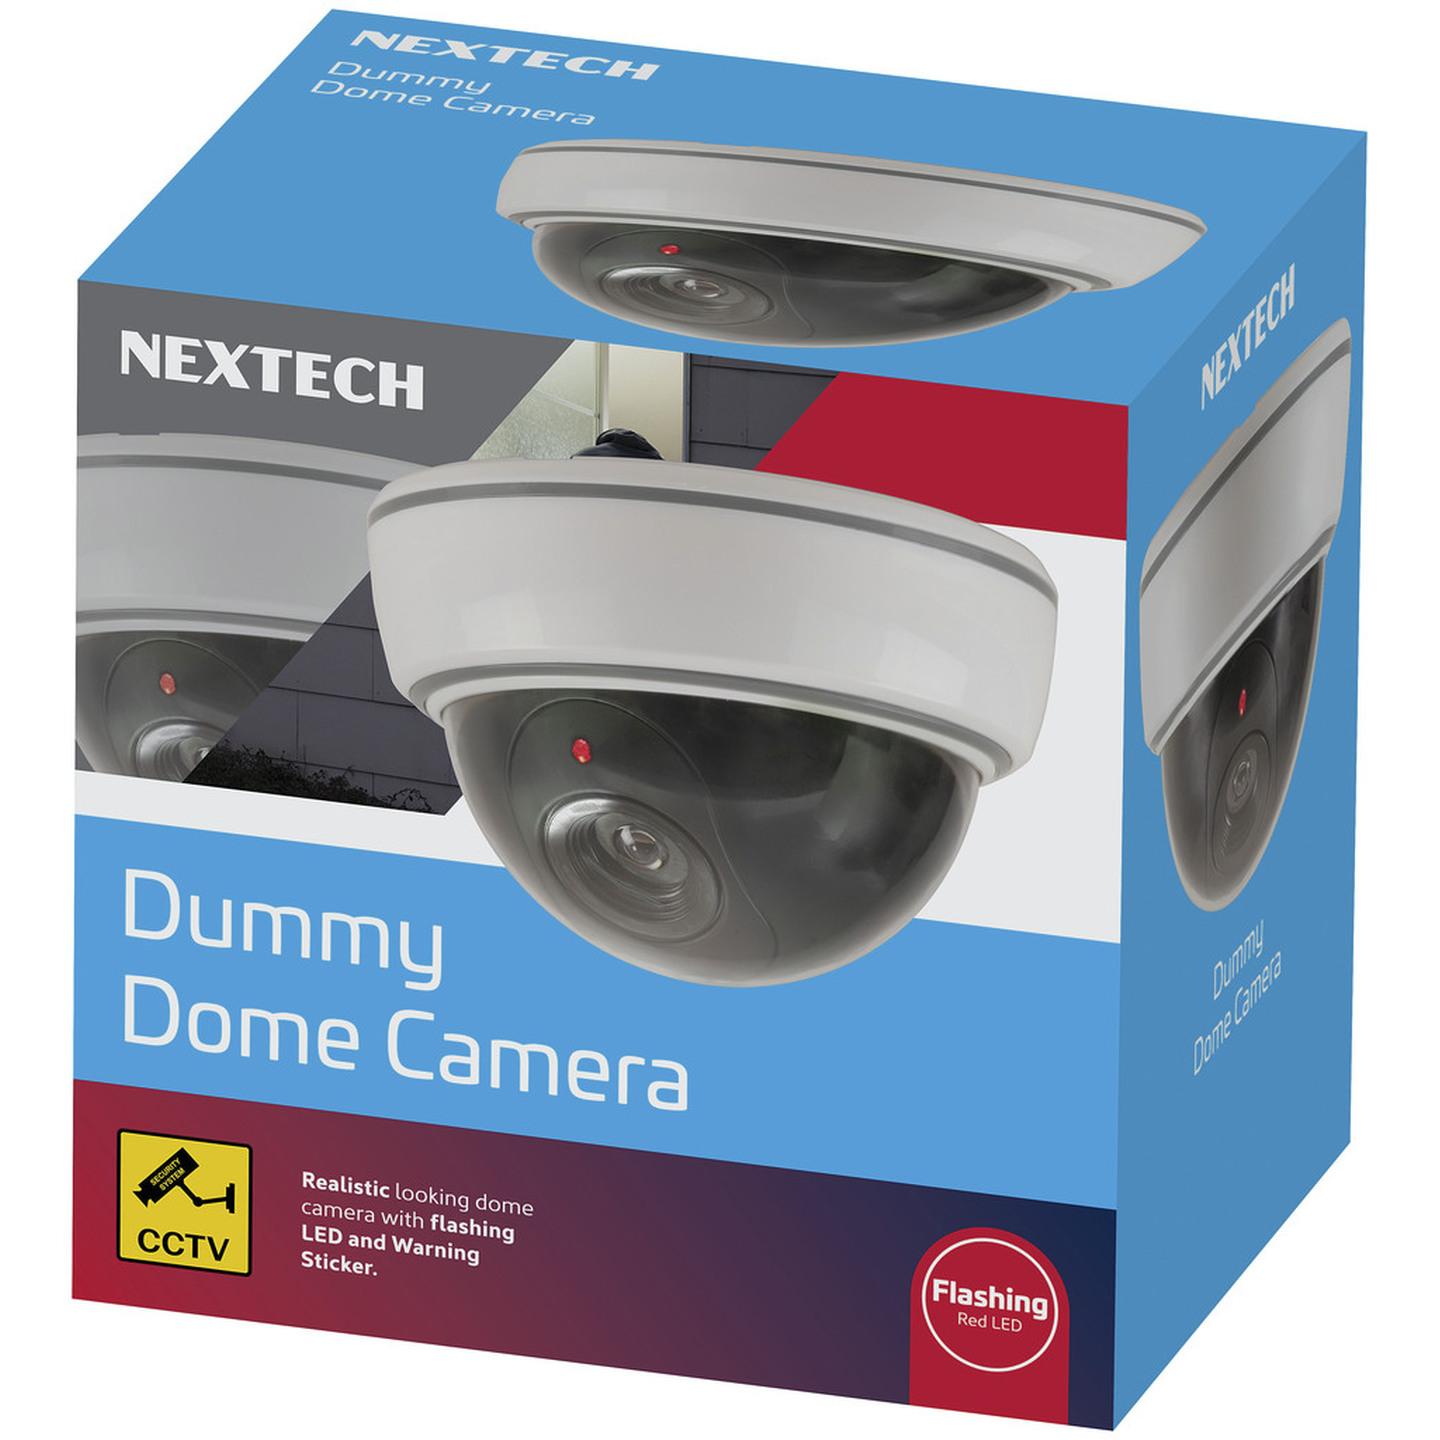 Dummy Dome Camera